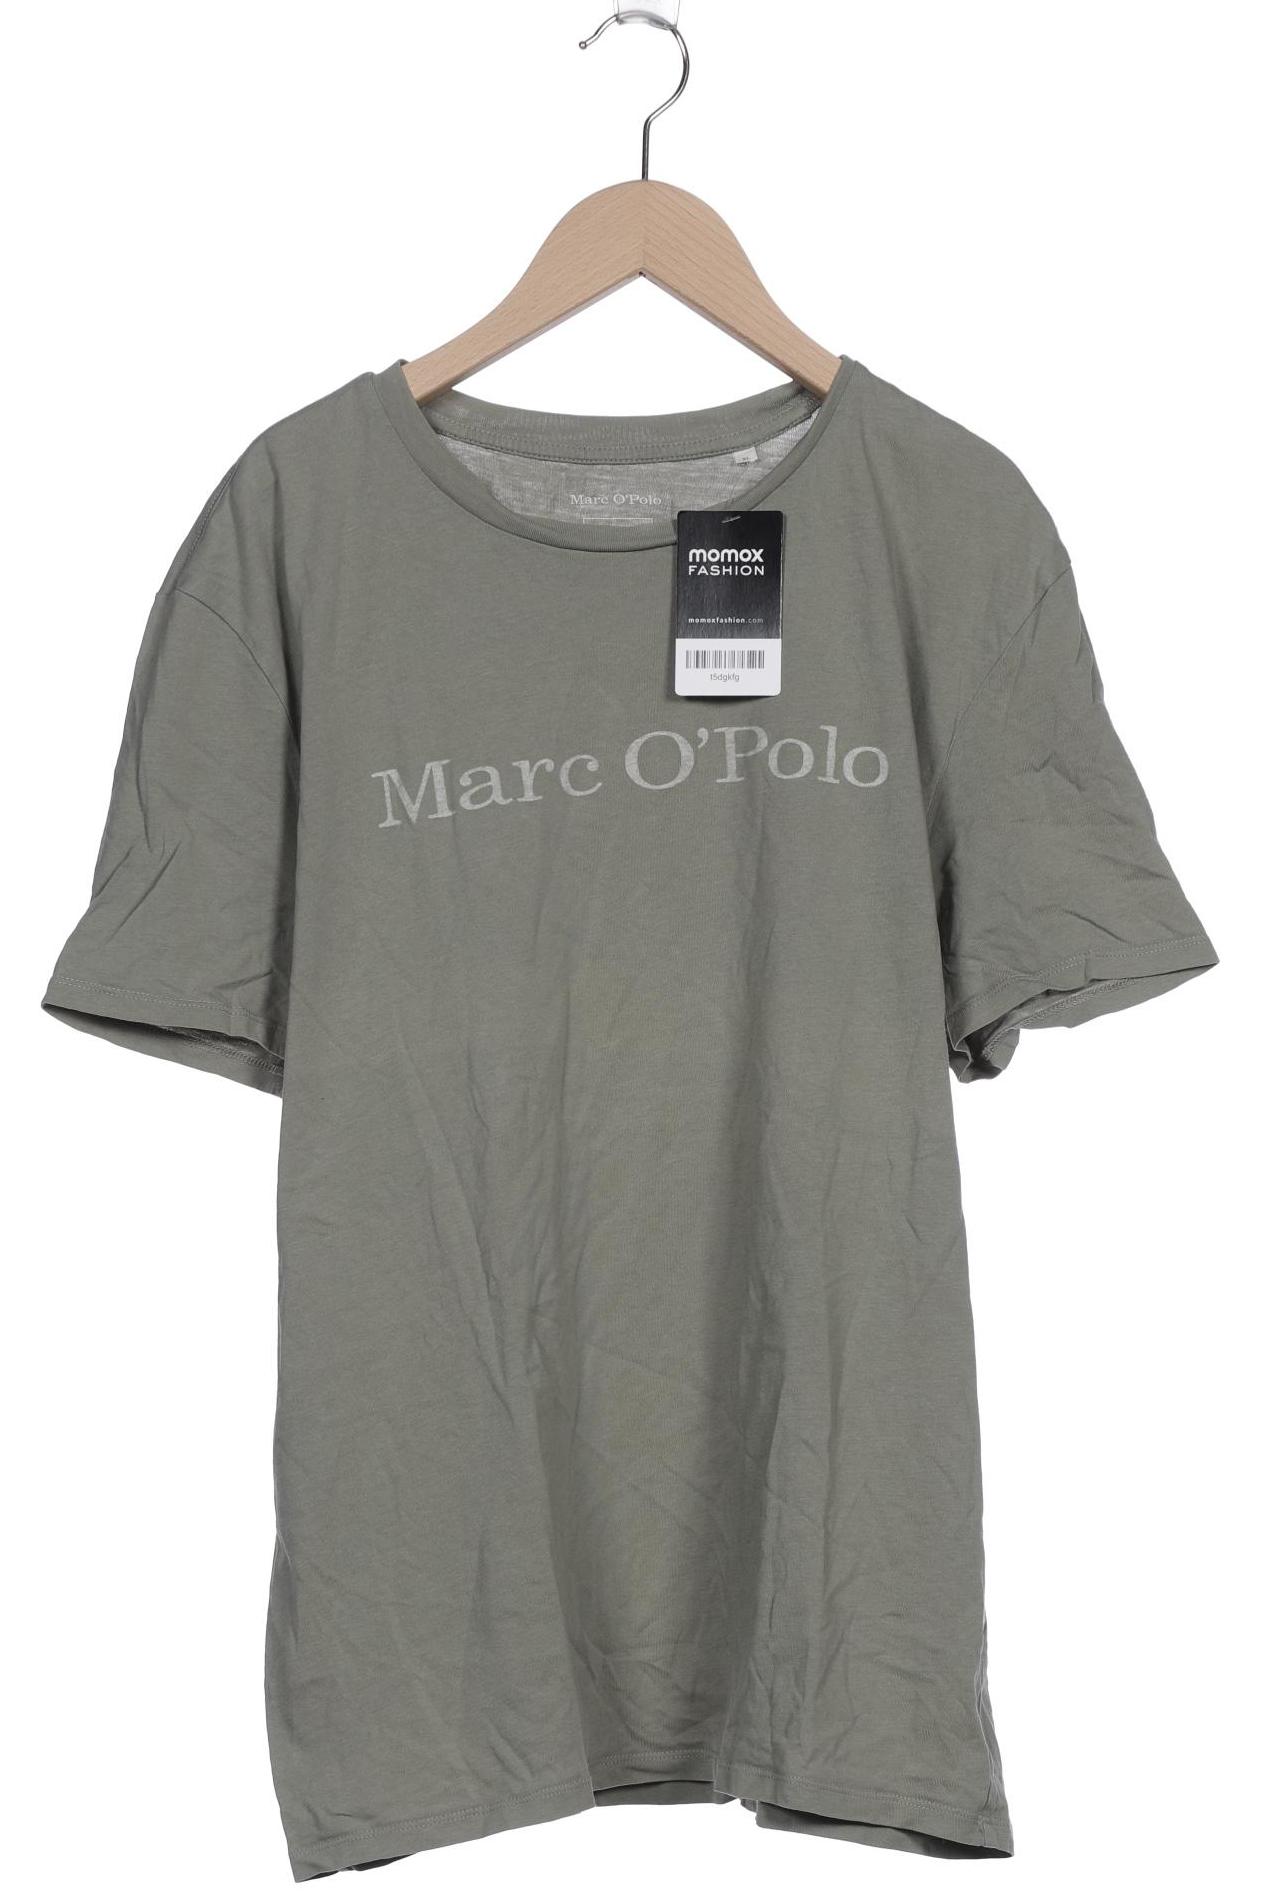 Marc O Polo Herren T-Shirt, hellgrün von Marc O Polo